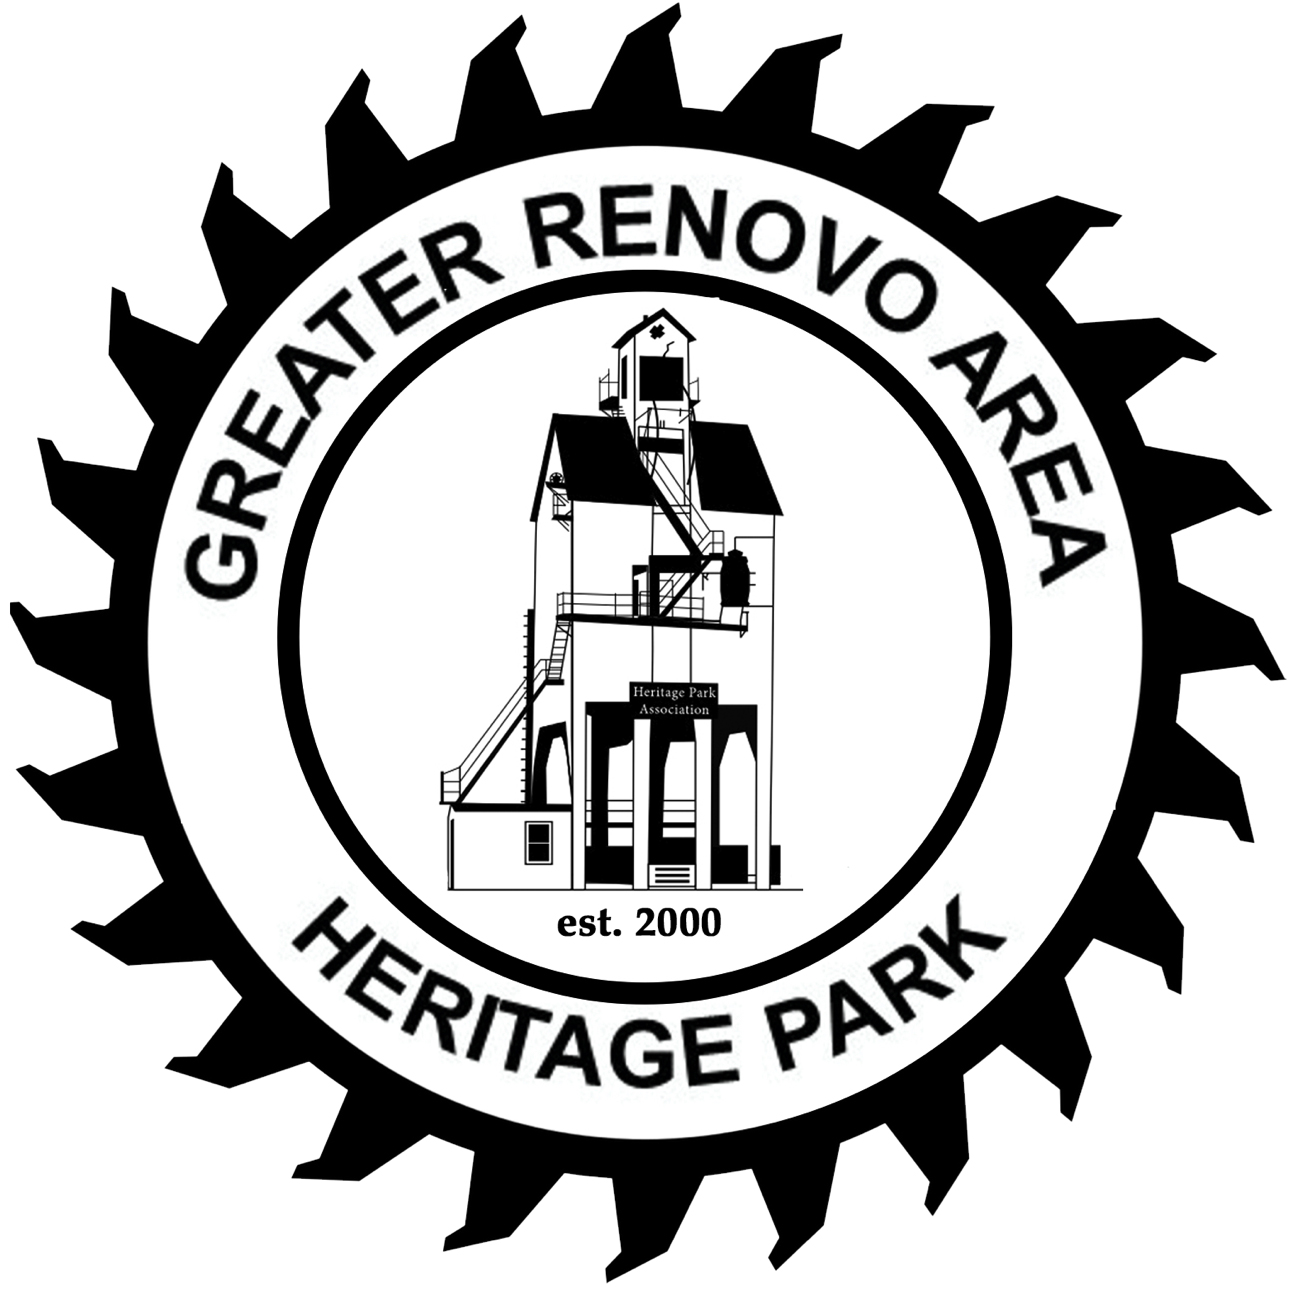 The Greater Renovo Area Heritage Park | Thomas E O’Connor | The Greater Renovo Area Heritage Park